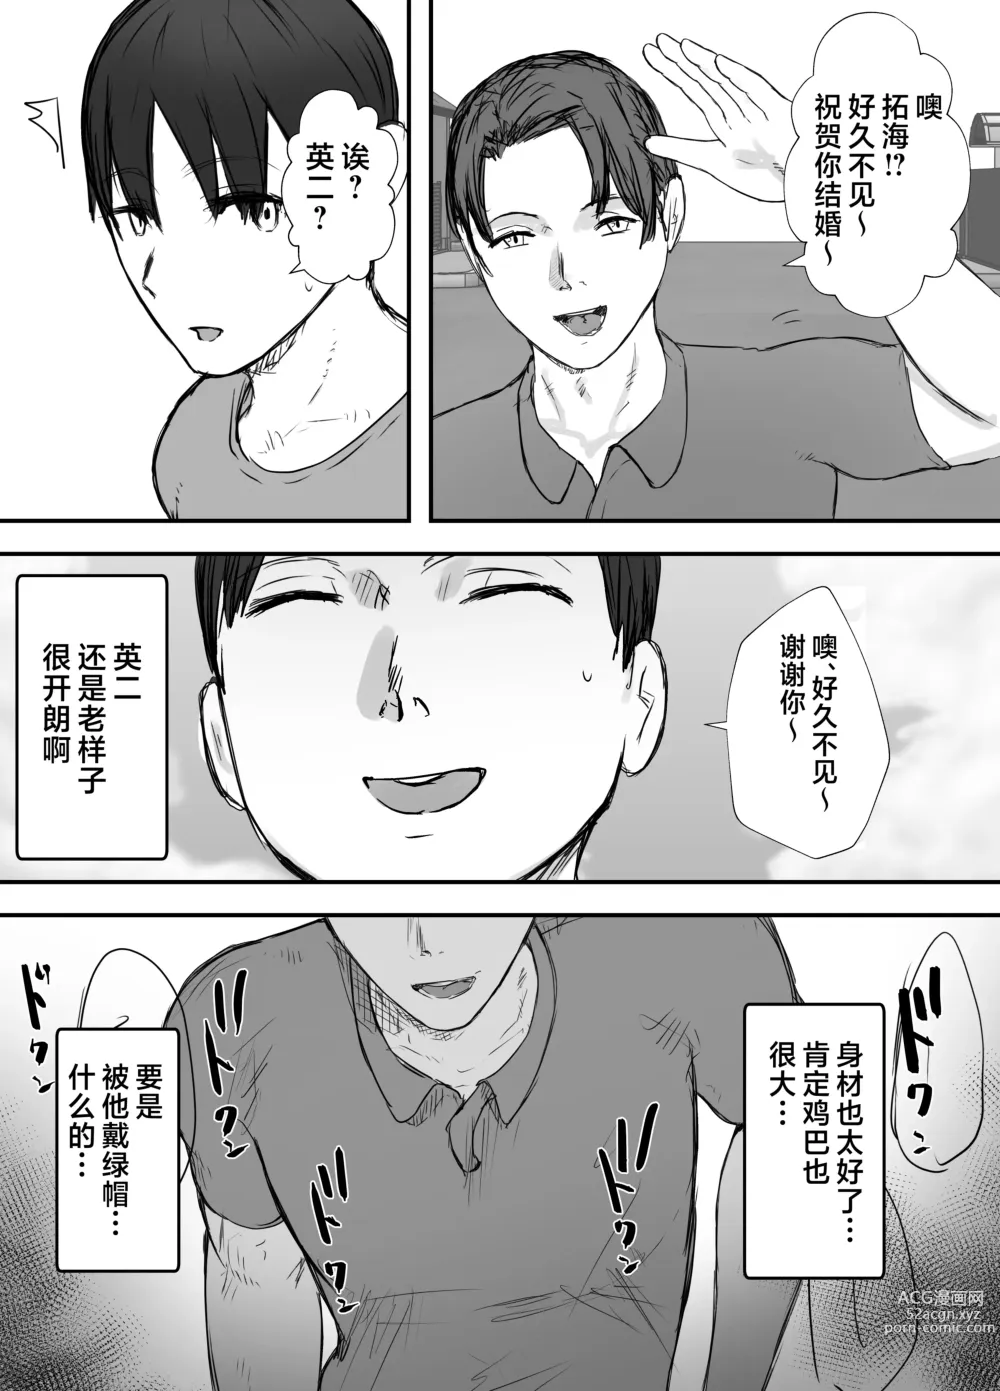 Page 9 of doujinshi 戴绿帽后悔似乎已经迟了哟?3